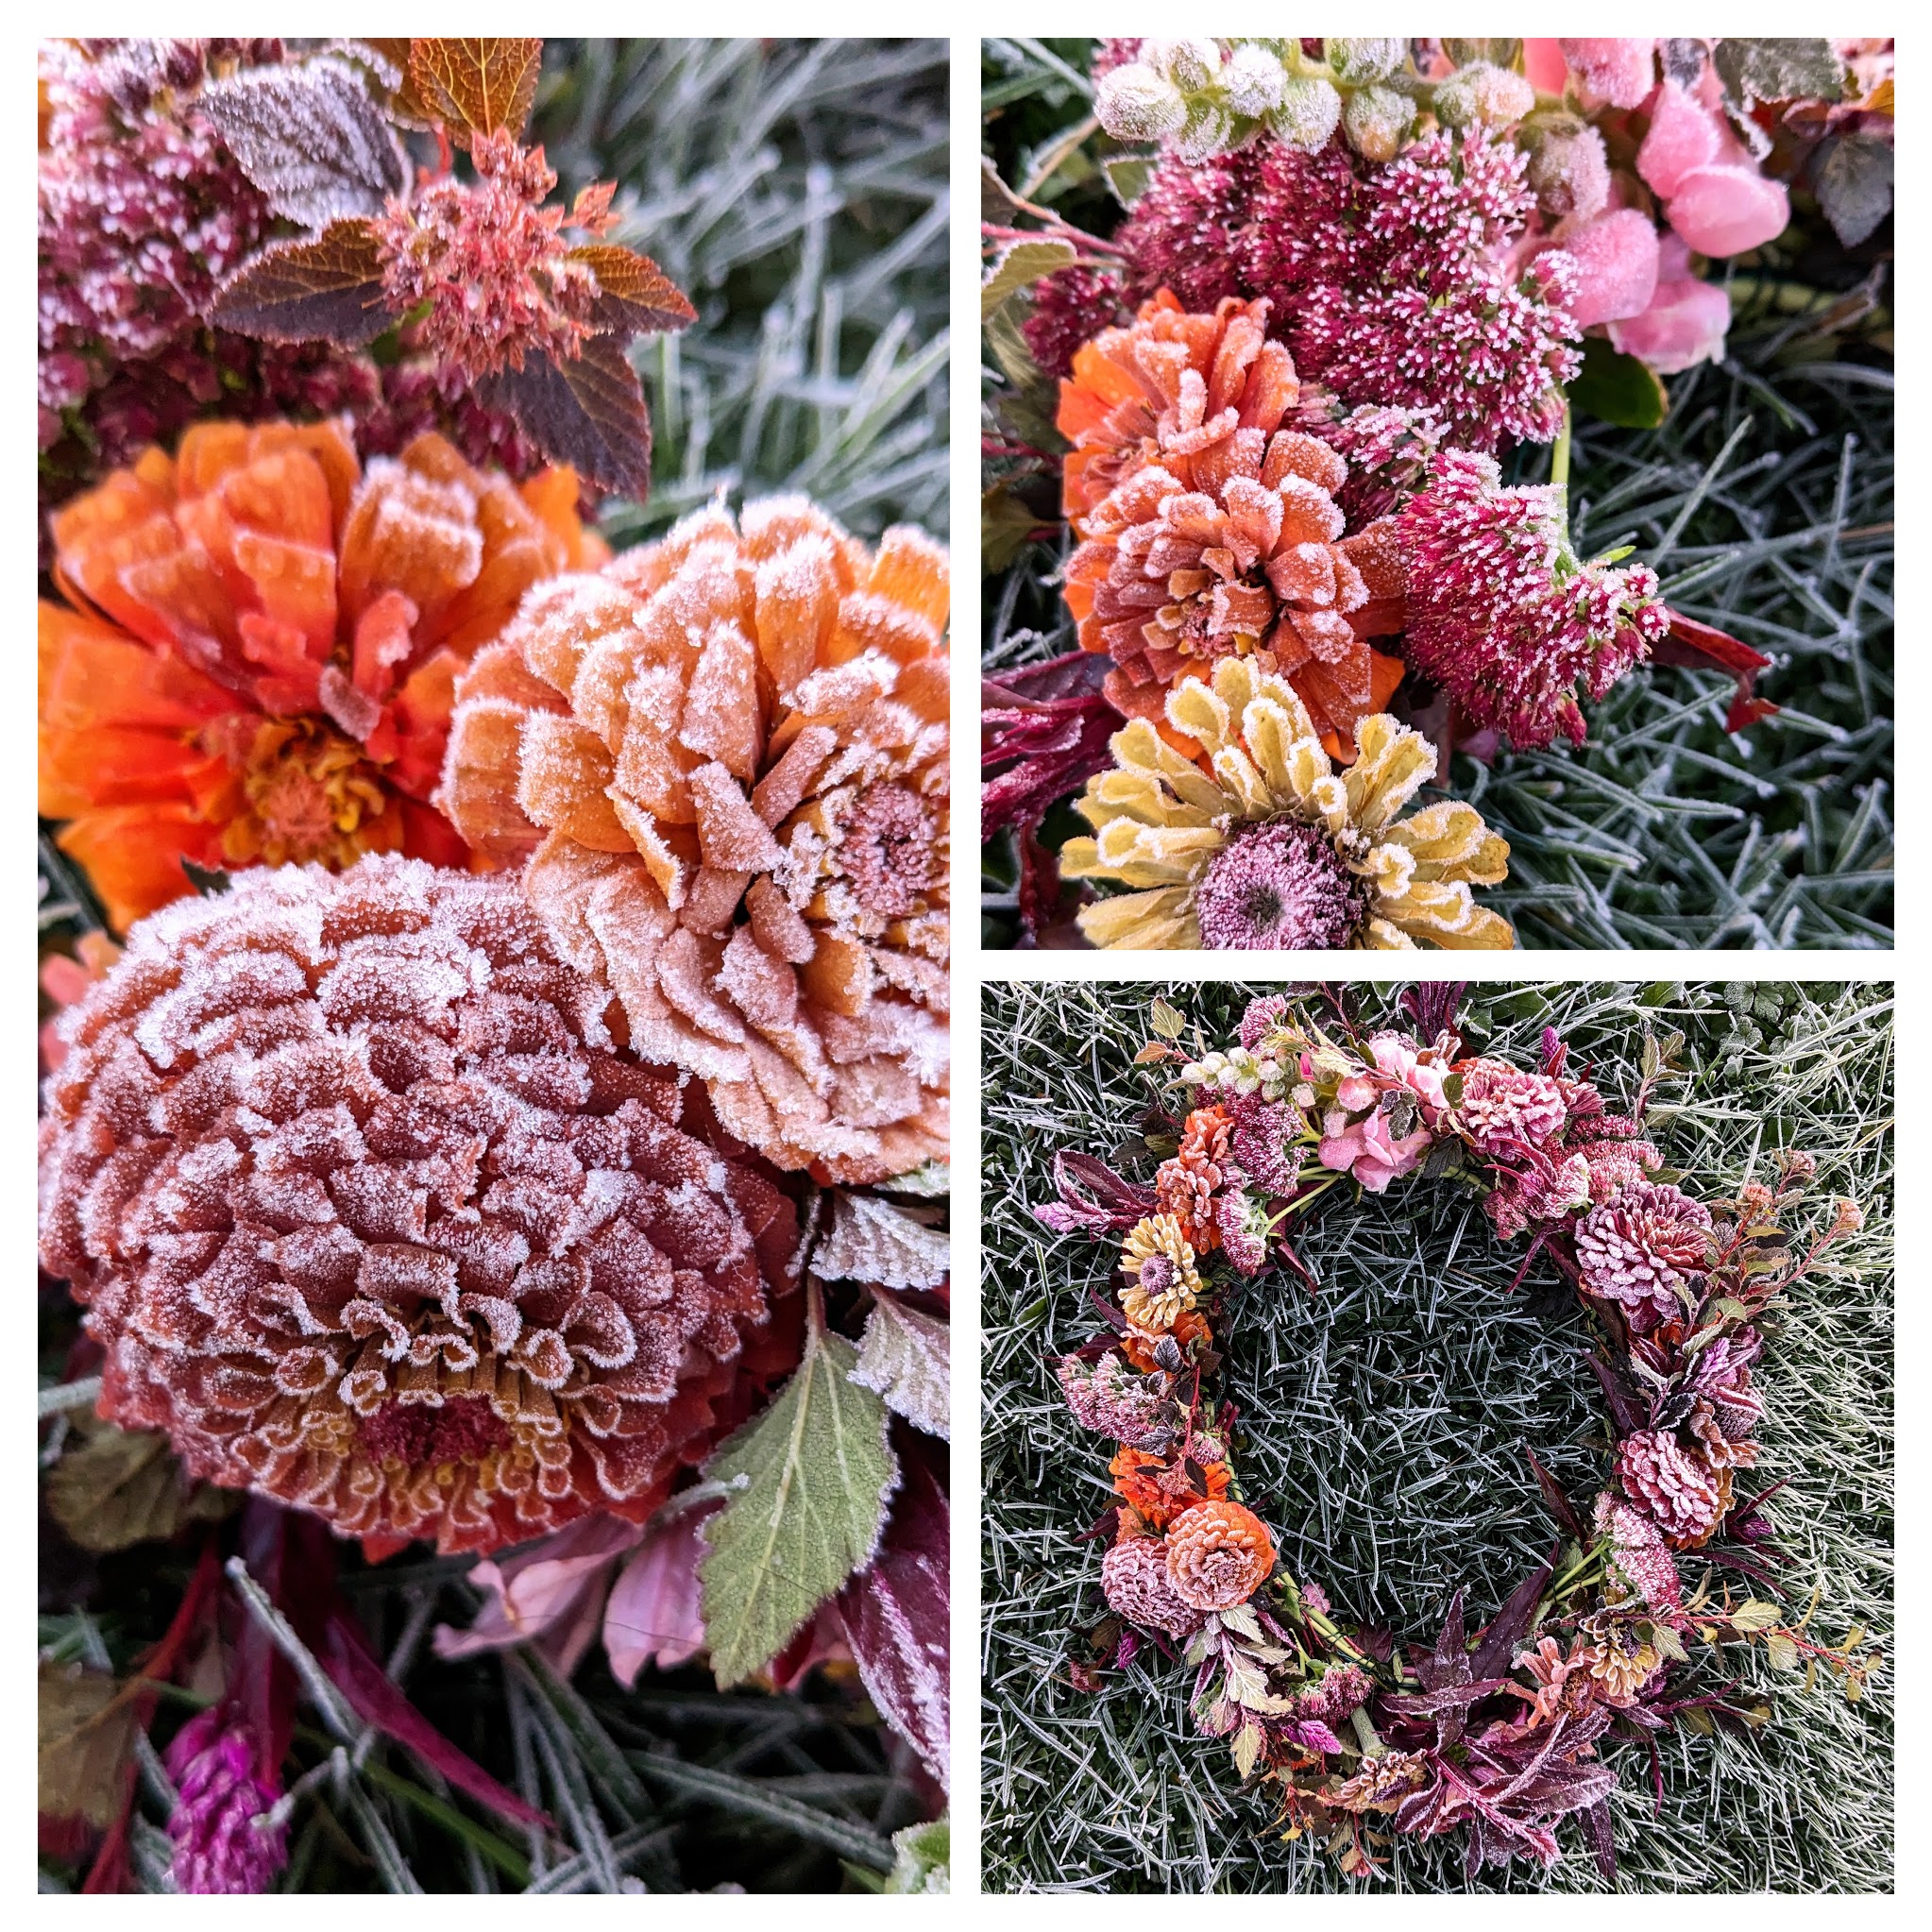 Flower wreath coated in frost.